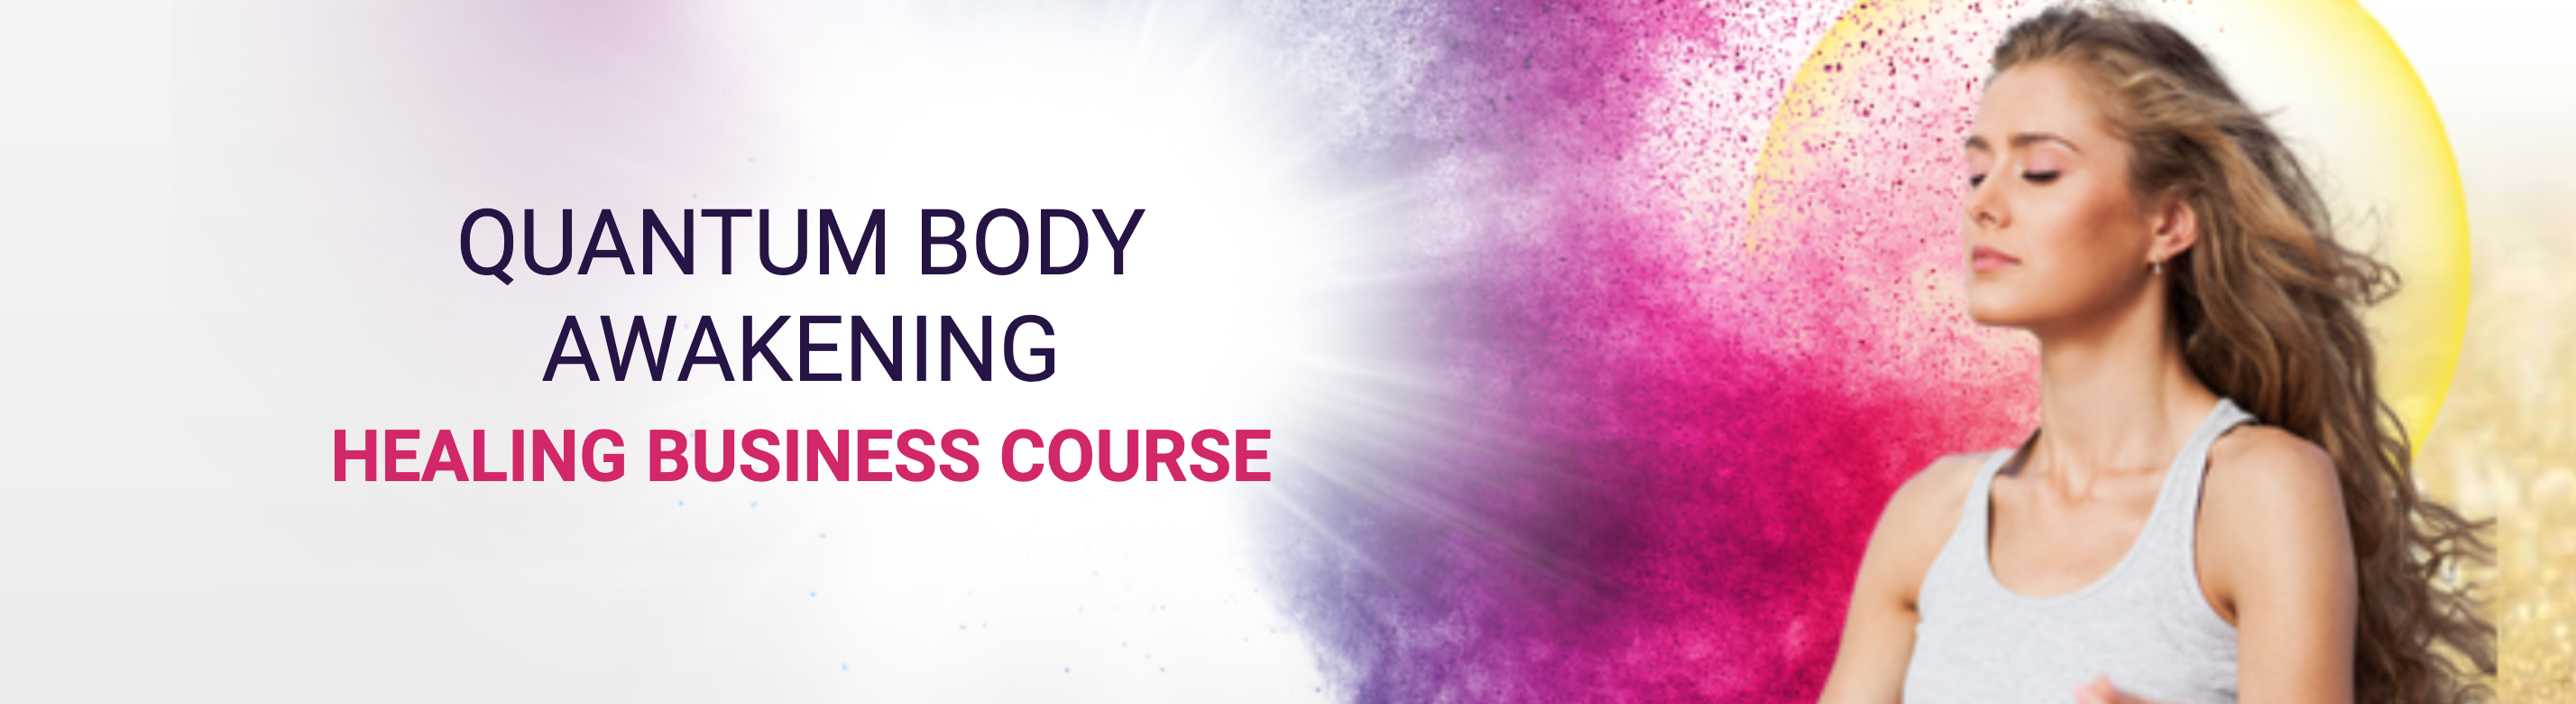 Quantum Body Awakening Healing Business Course 1